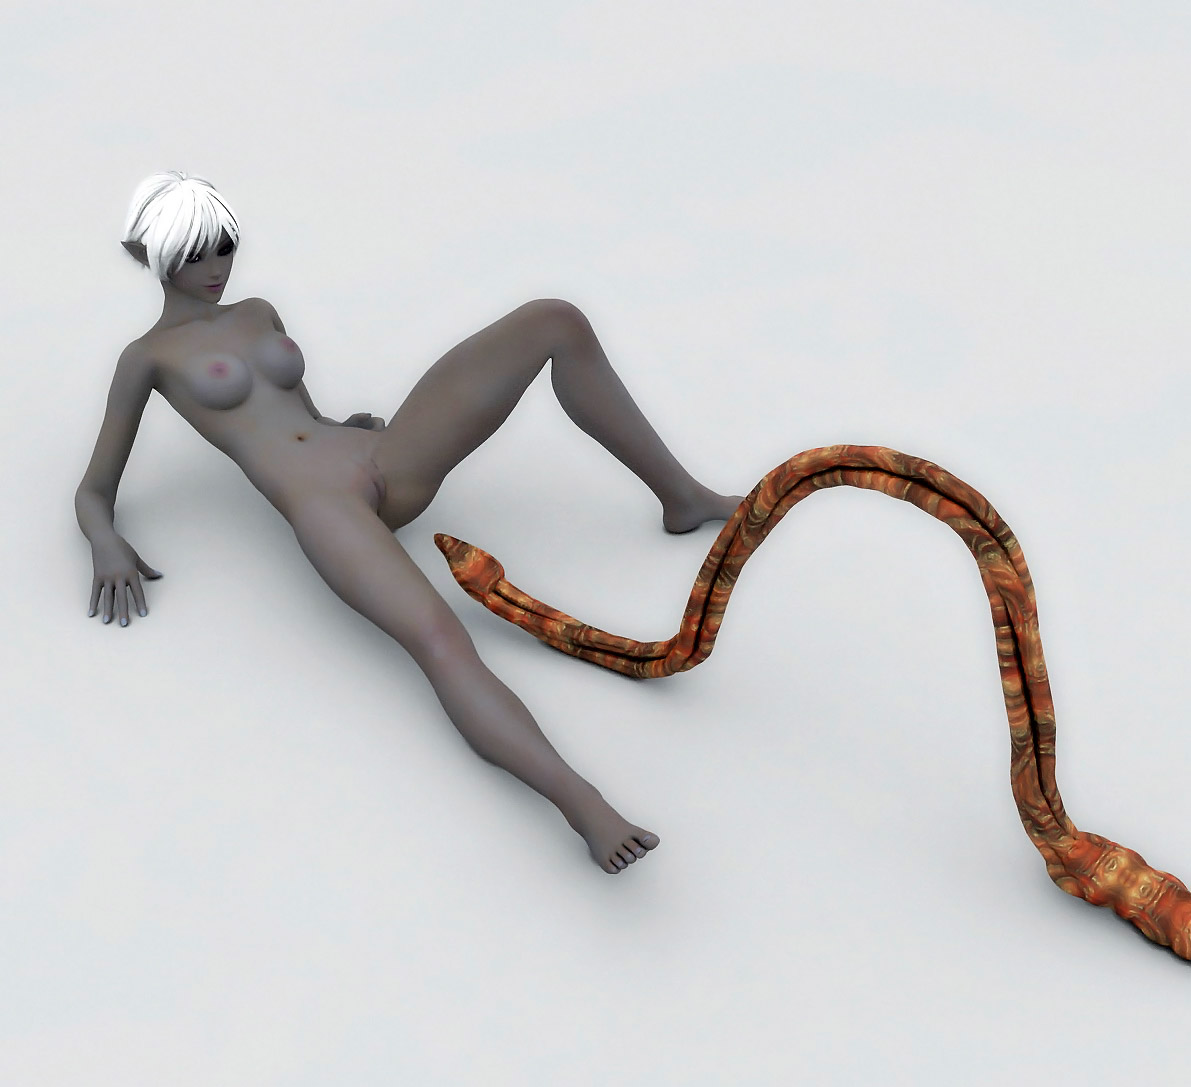 deidre alvarez add girl sex with snake photo